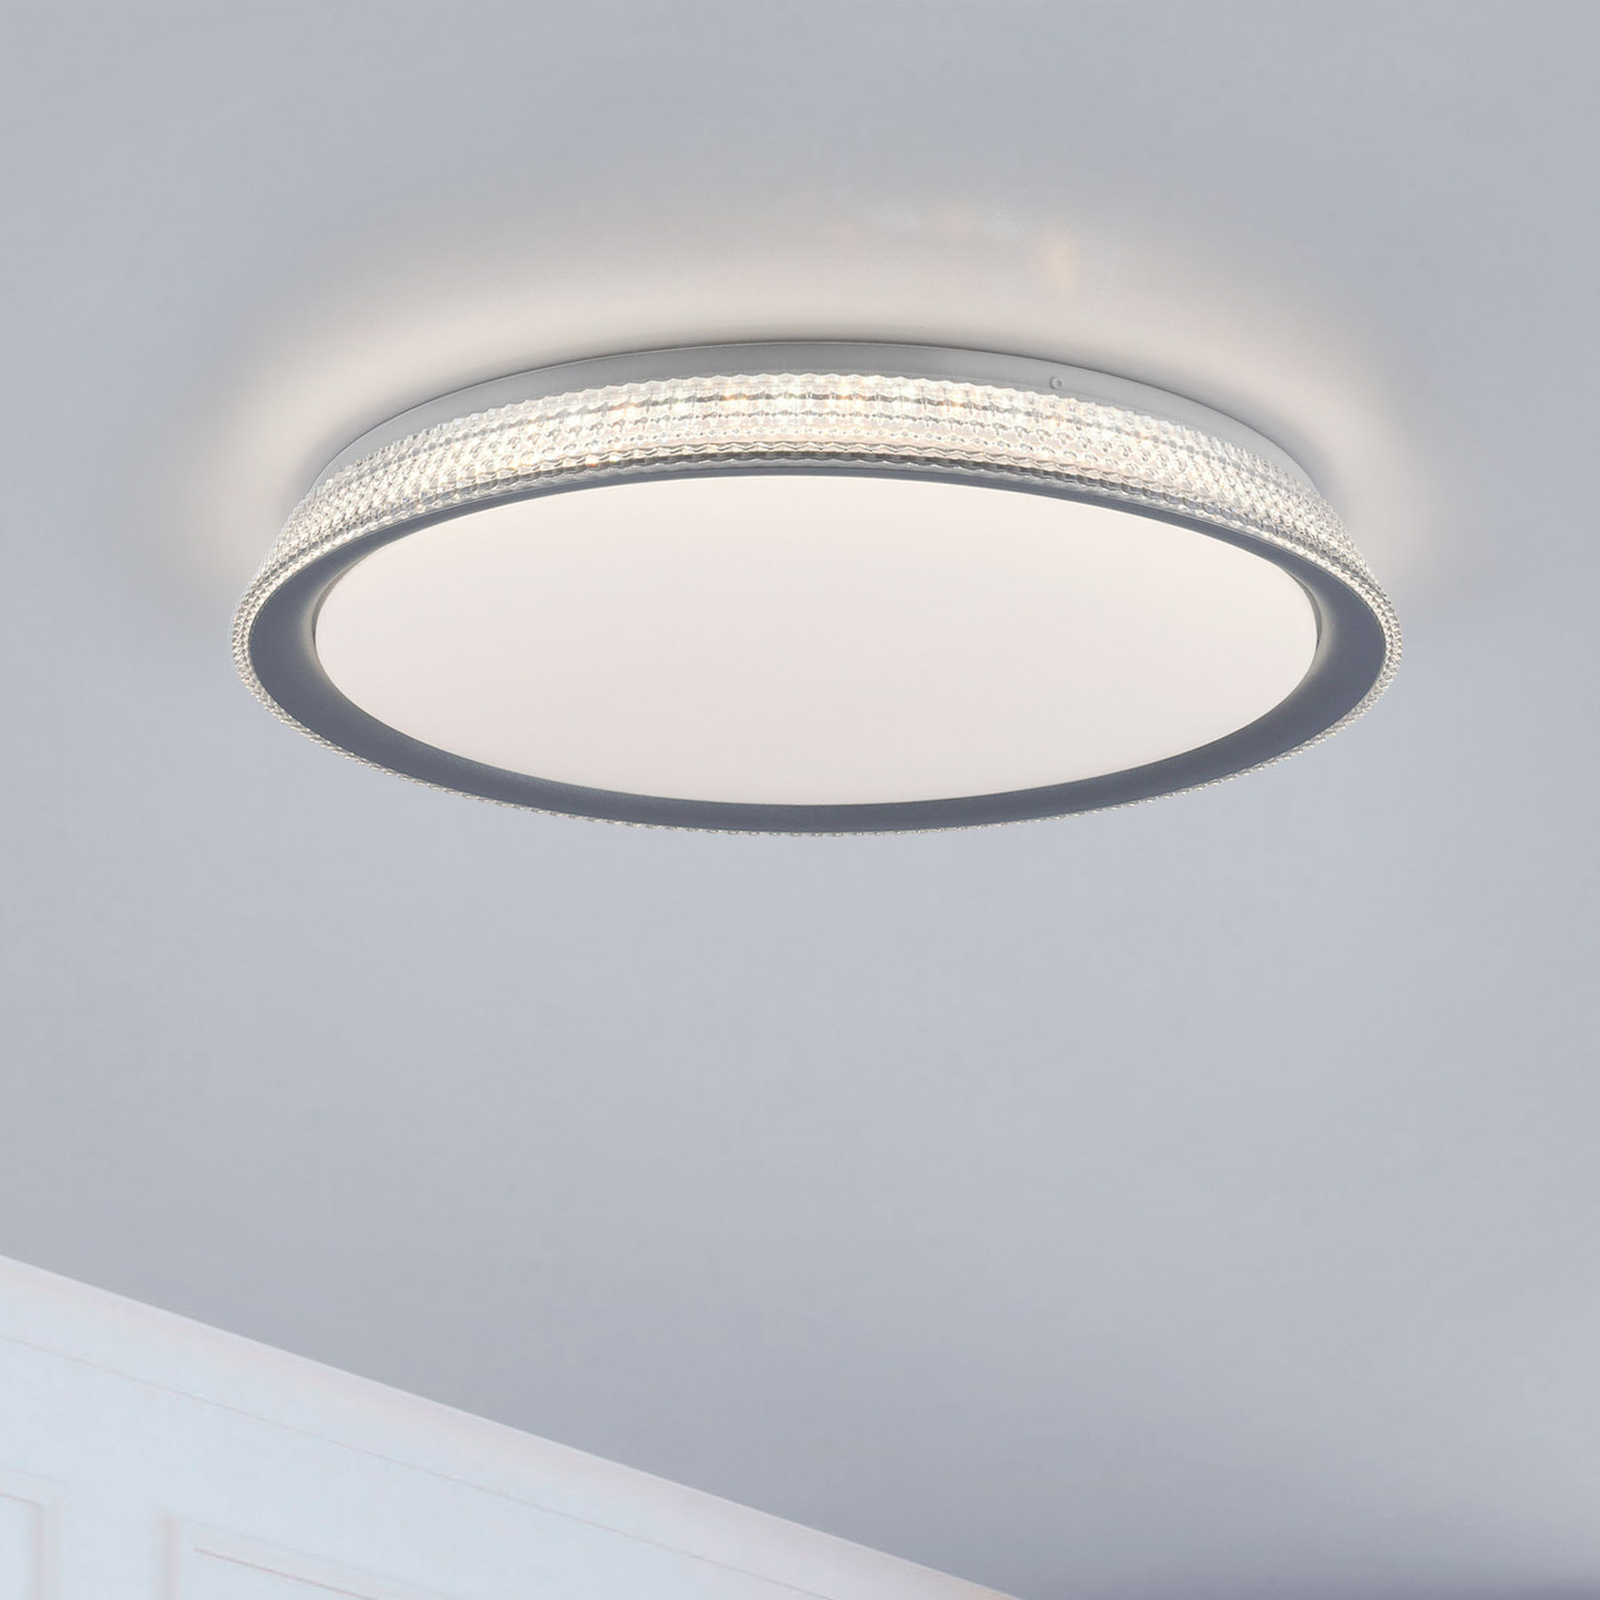 LED ceiling light Kari, dimmable Switchmo, Ø 51cm